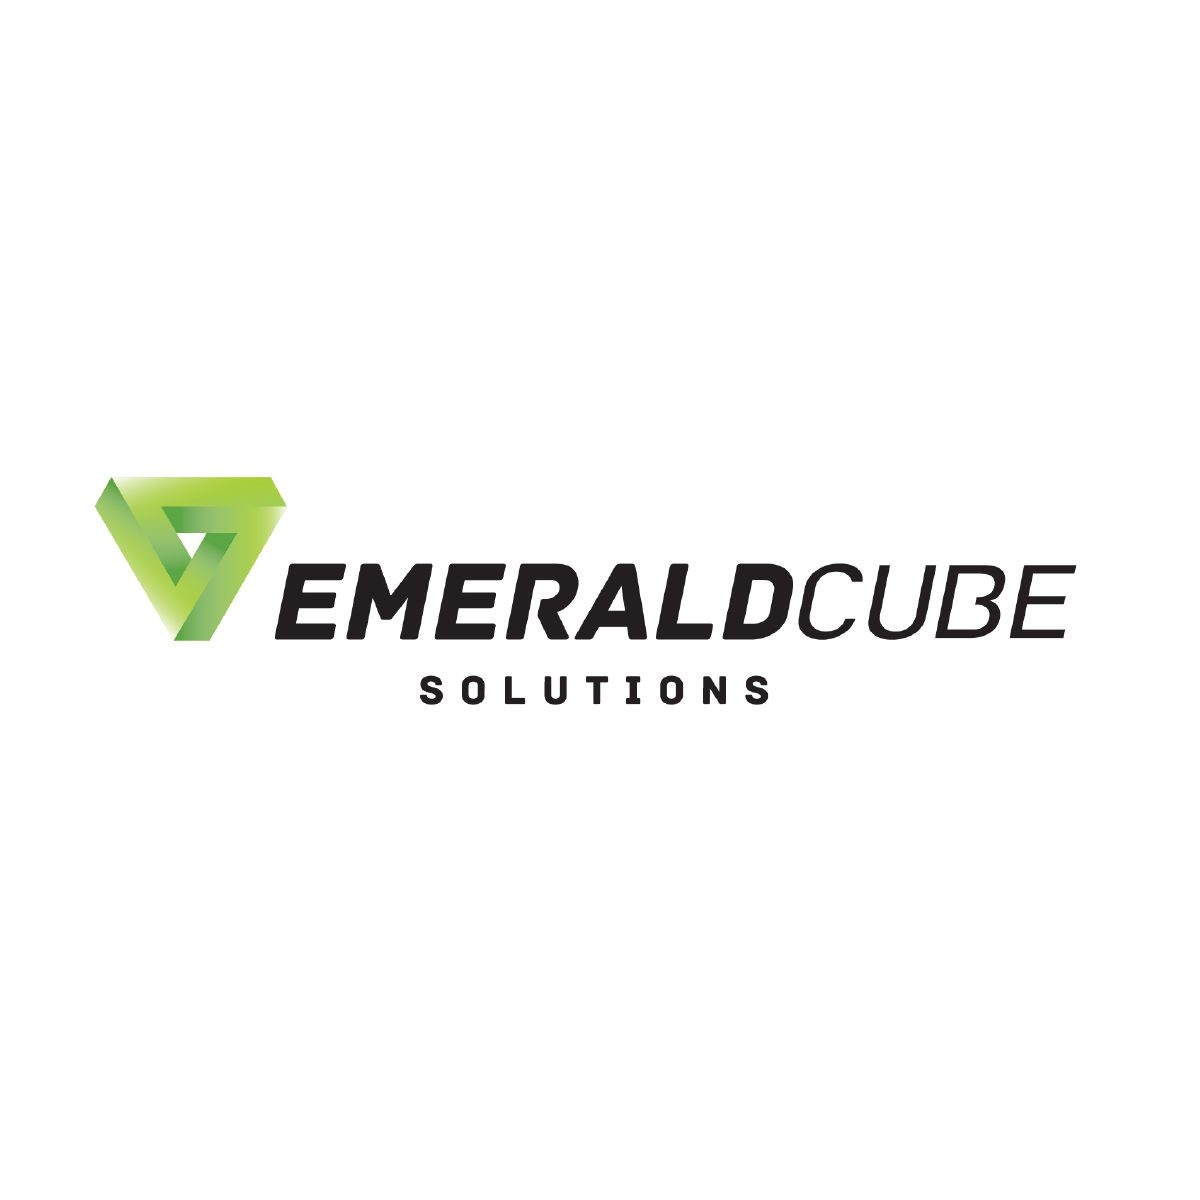 EmeraldCube